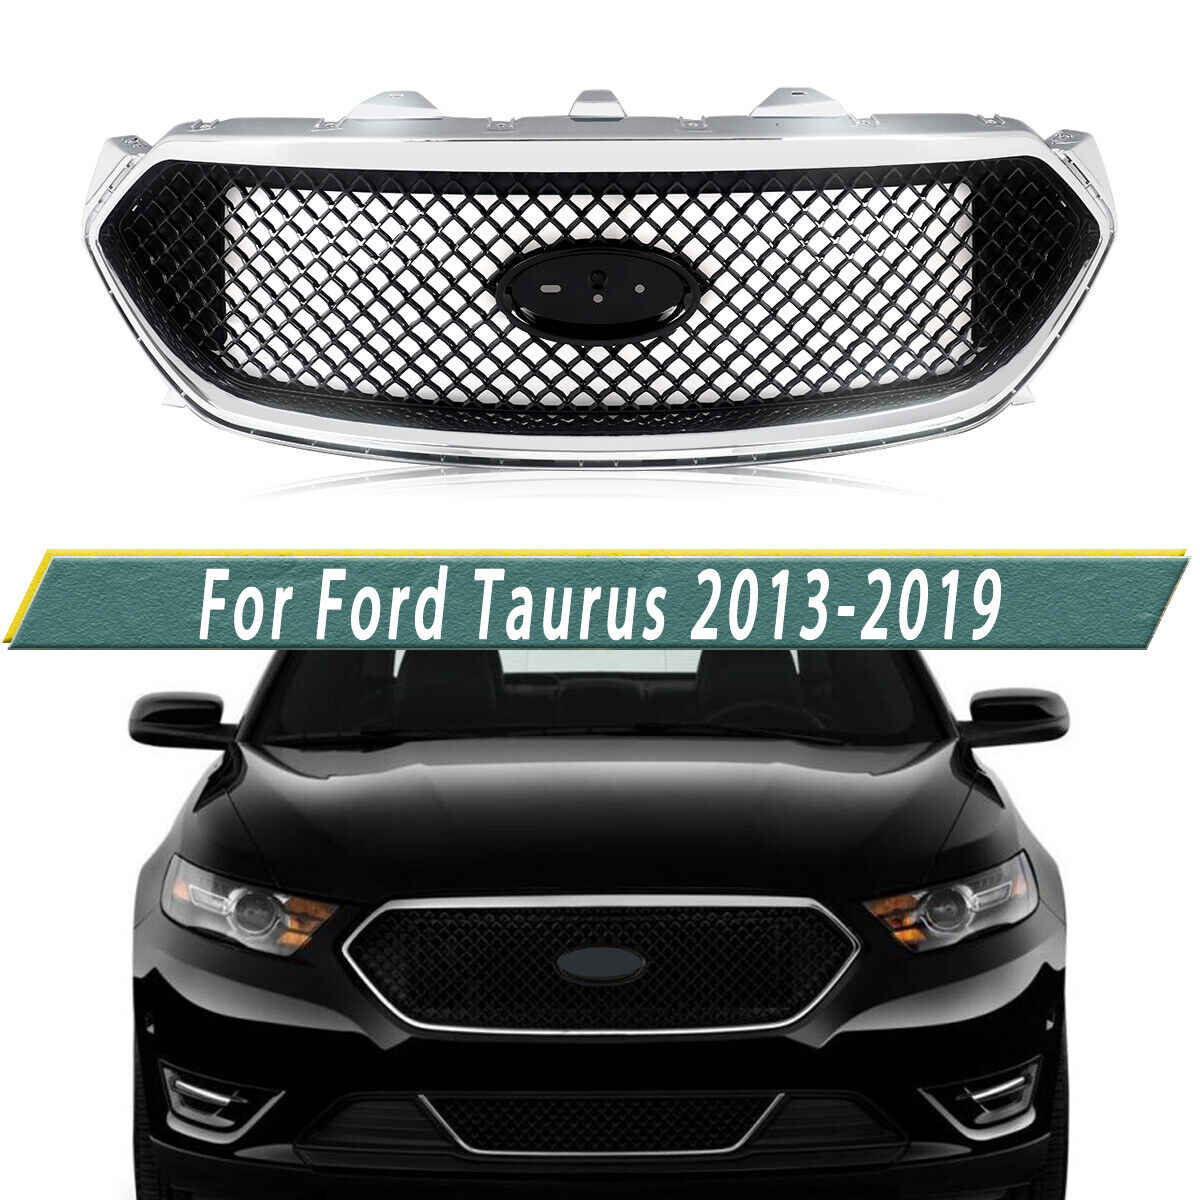 For Ford Taurus SHO 2013-2019 Front Upper Grille Black Chrome Trim DG1Z-8200-DC